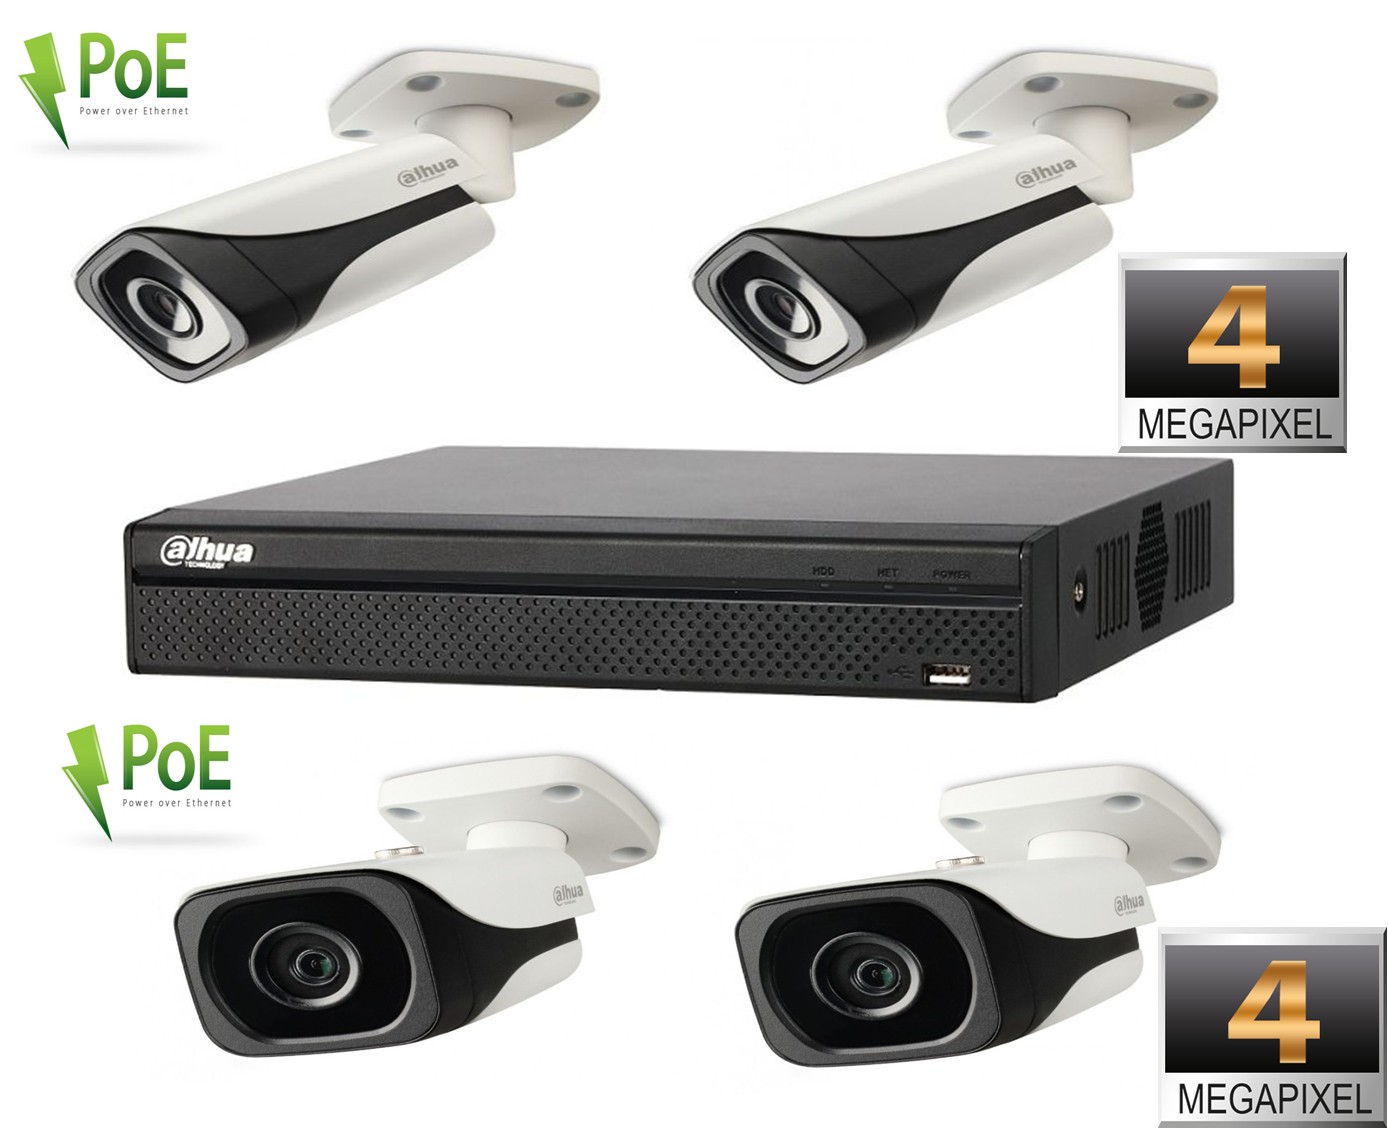 Multiple Musty Line of sight Kit profesional de supraveghere video POE cu 4 camere IP Dahua rezolutie  4MP IR 30m, NVR Dahua 4 canale 6MP - Rovision - Camere Supraveghere, Sisteme  Alarma, Video Interfoane